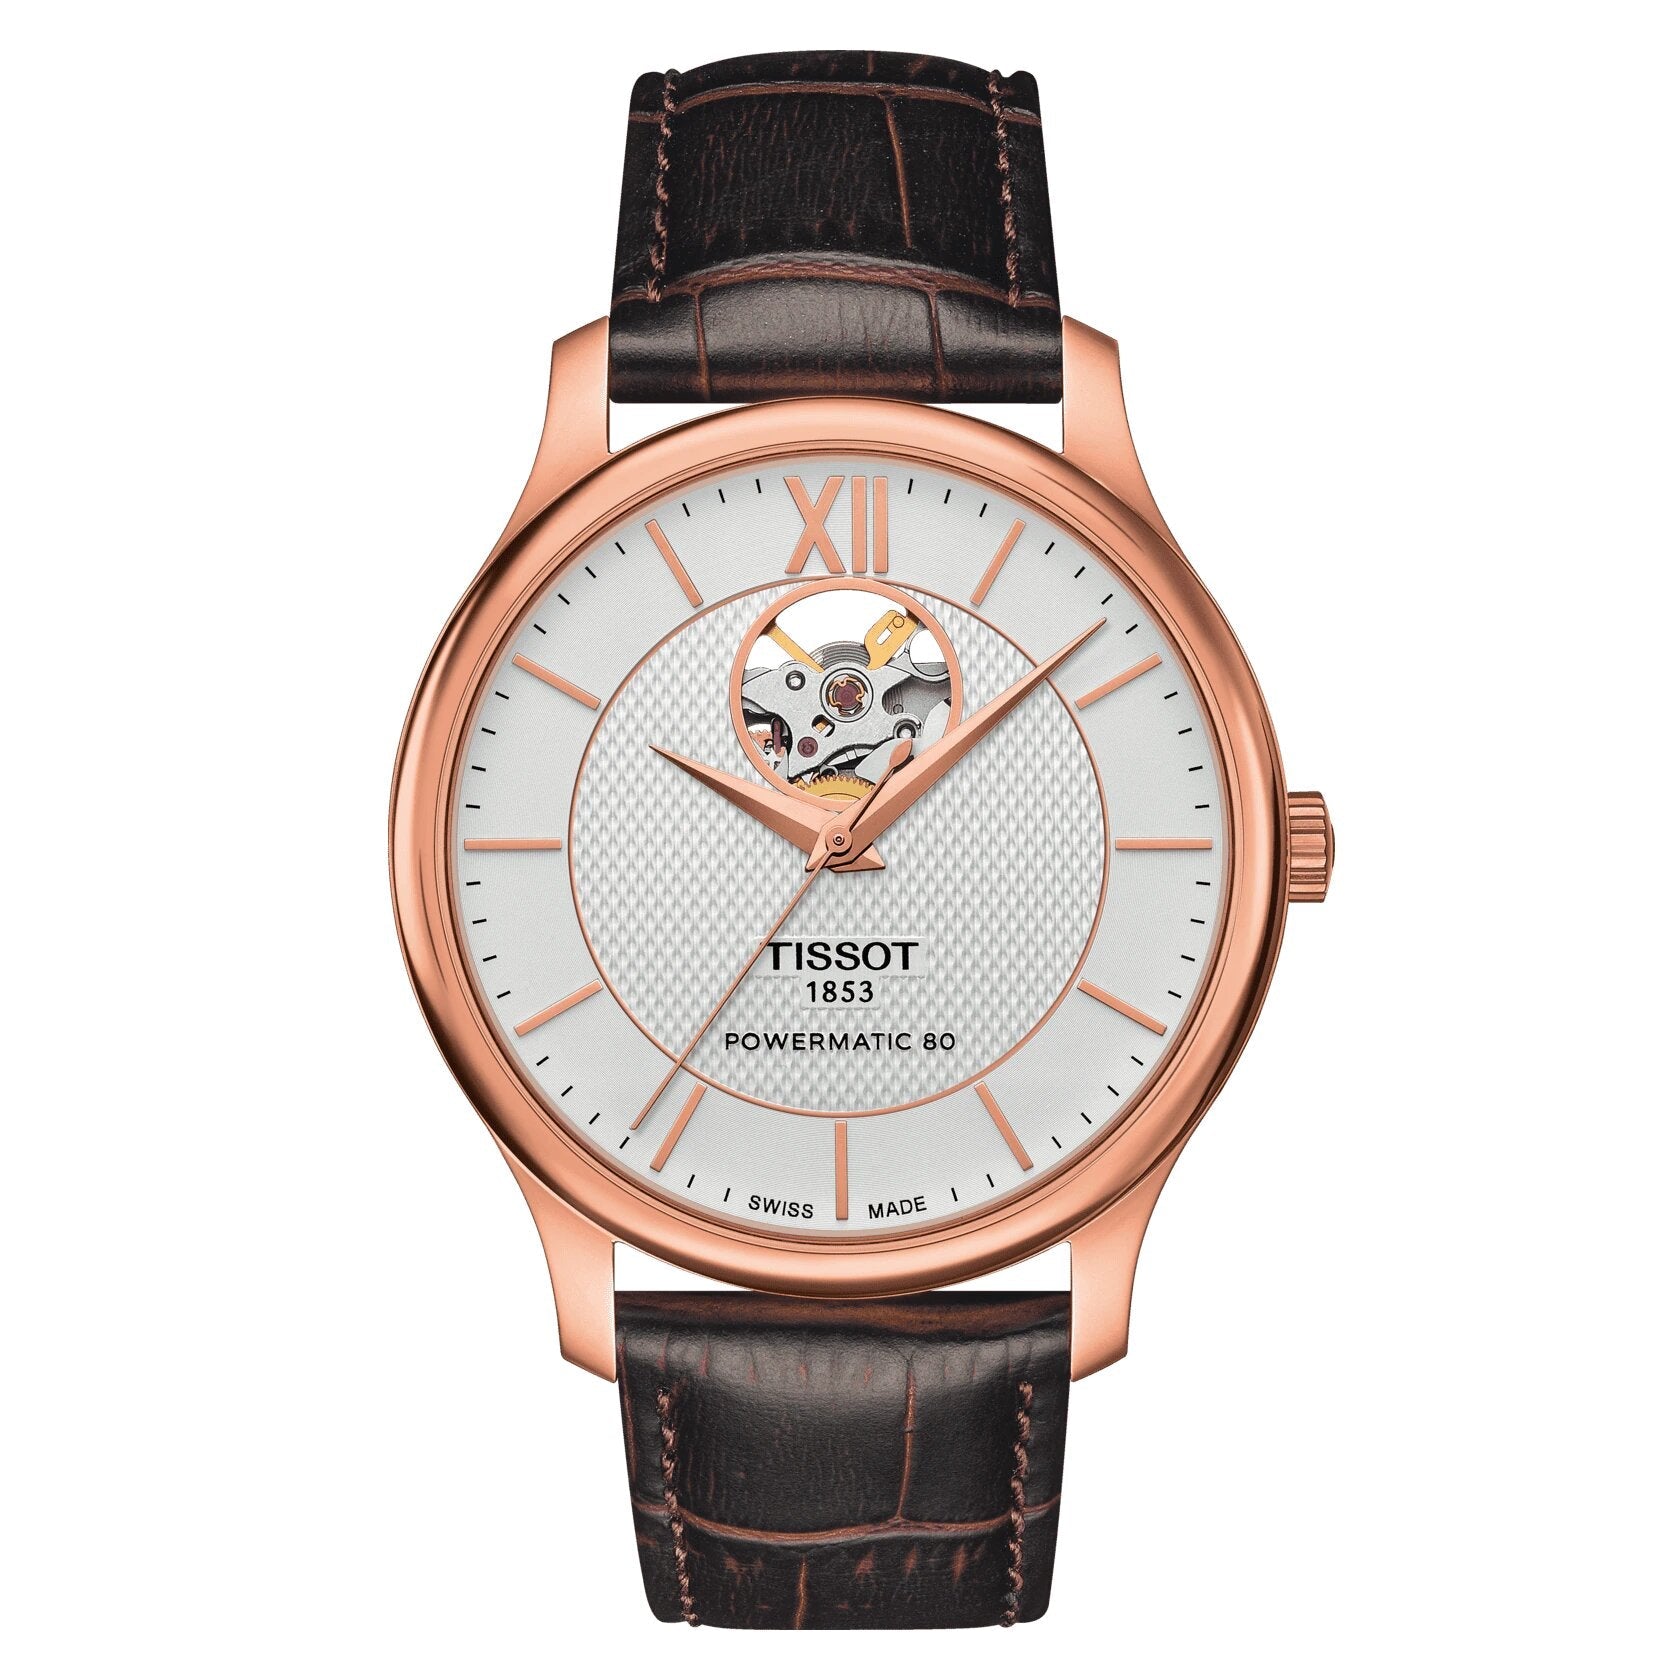 Tissot Tradition Powermatic 80 Open Heart Automatic Men's Watch T0639073603800